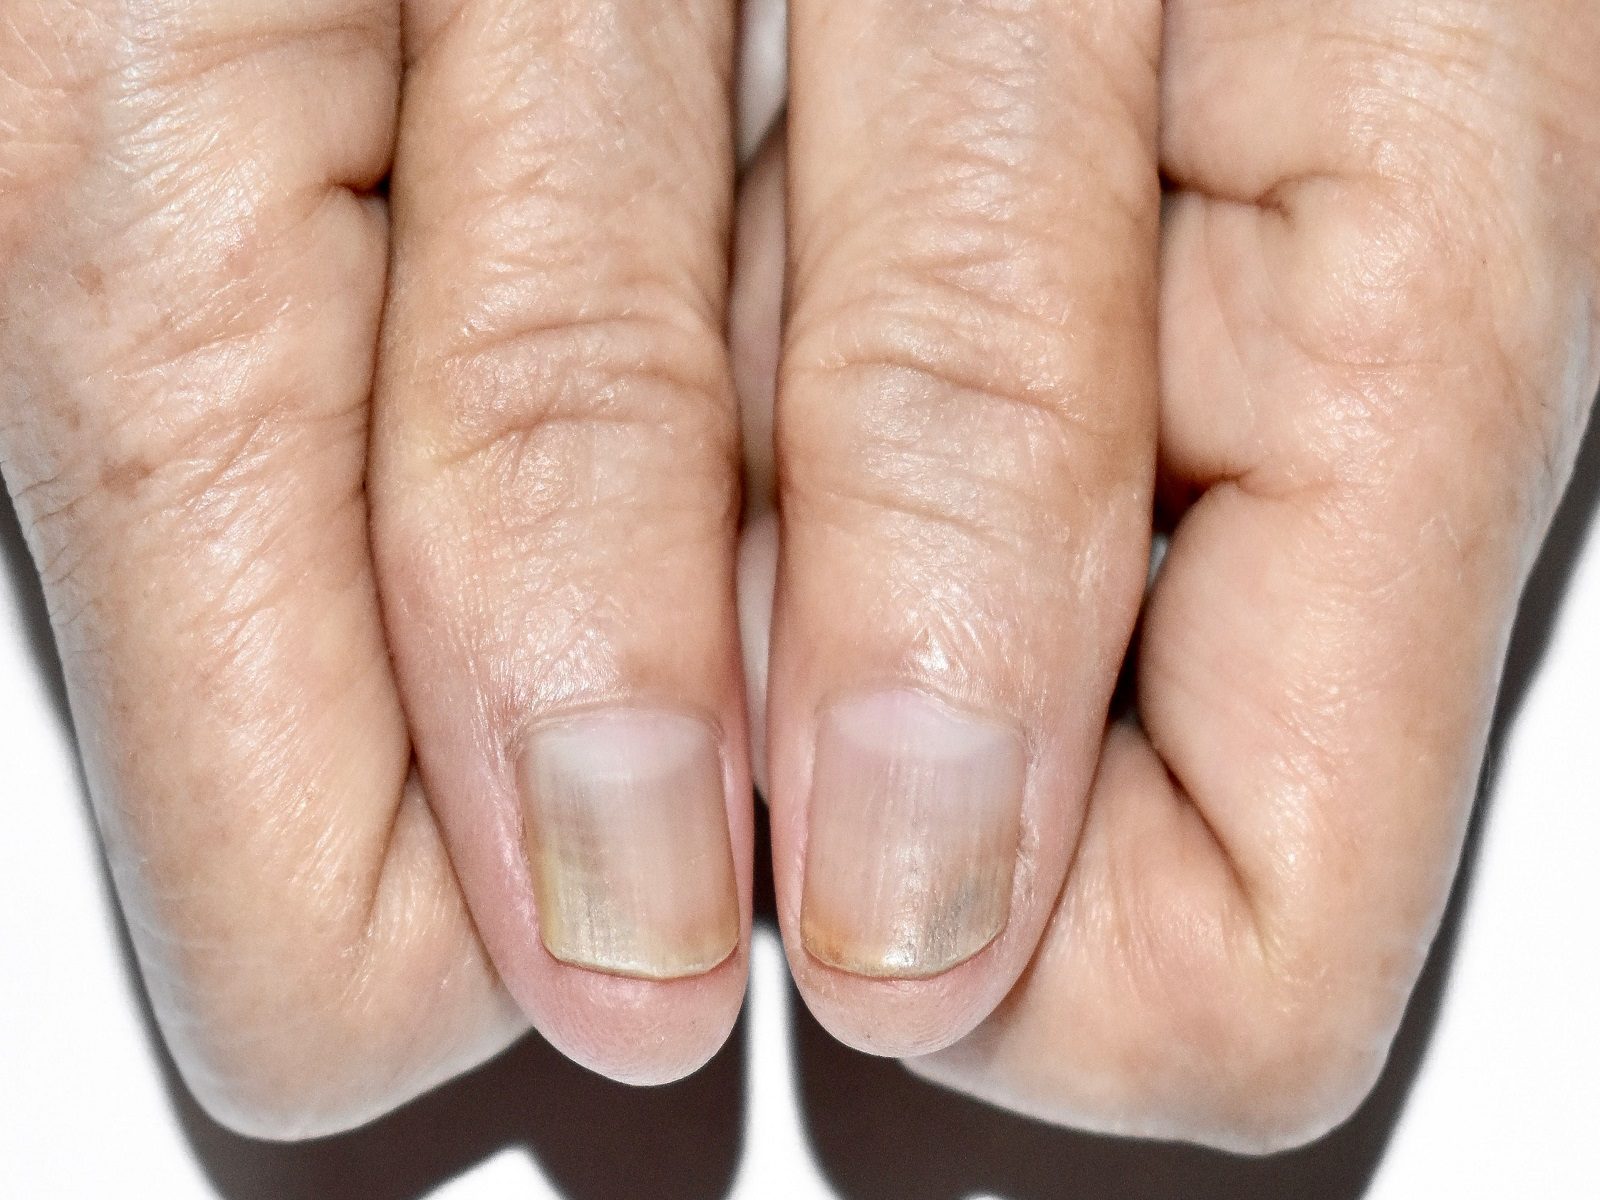 नखांना बुरशीचा संसर्ग झाल्यास काय कराल? - Marathi News | What to do if the  fingernails are infected with fungus? | Latest health News at Lokmat.com